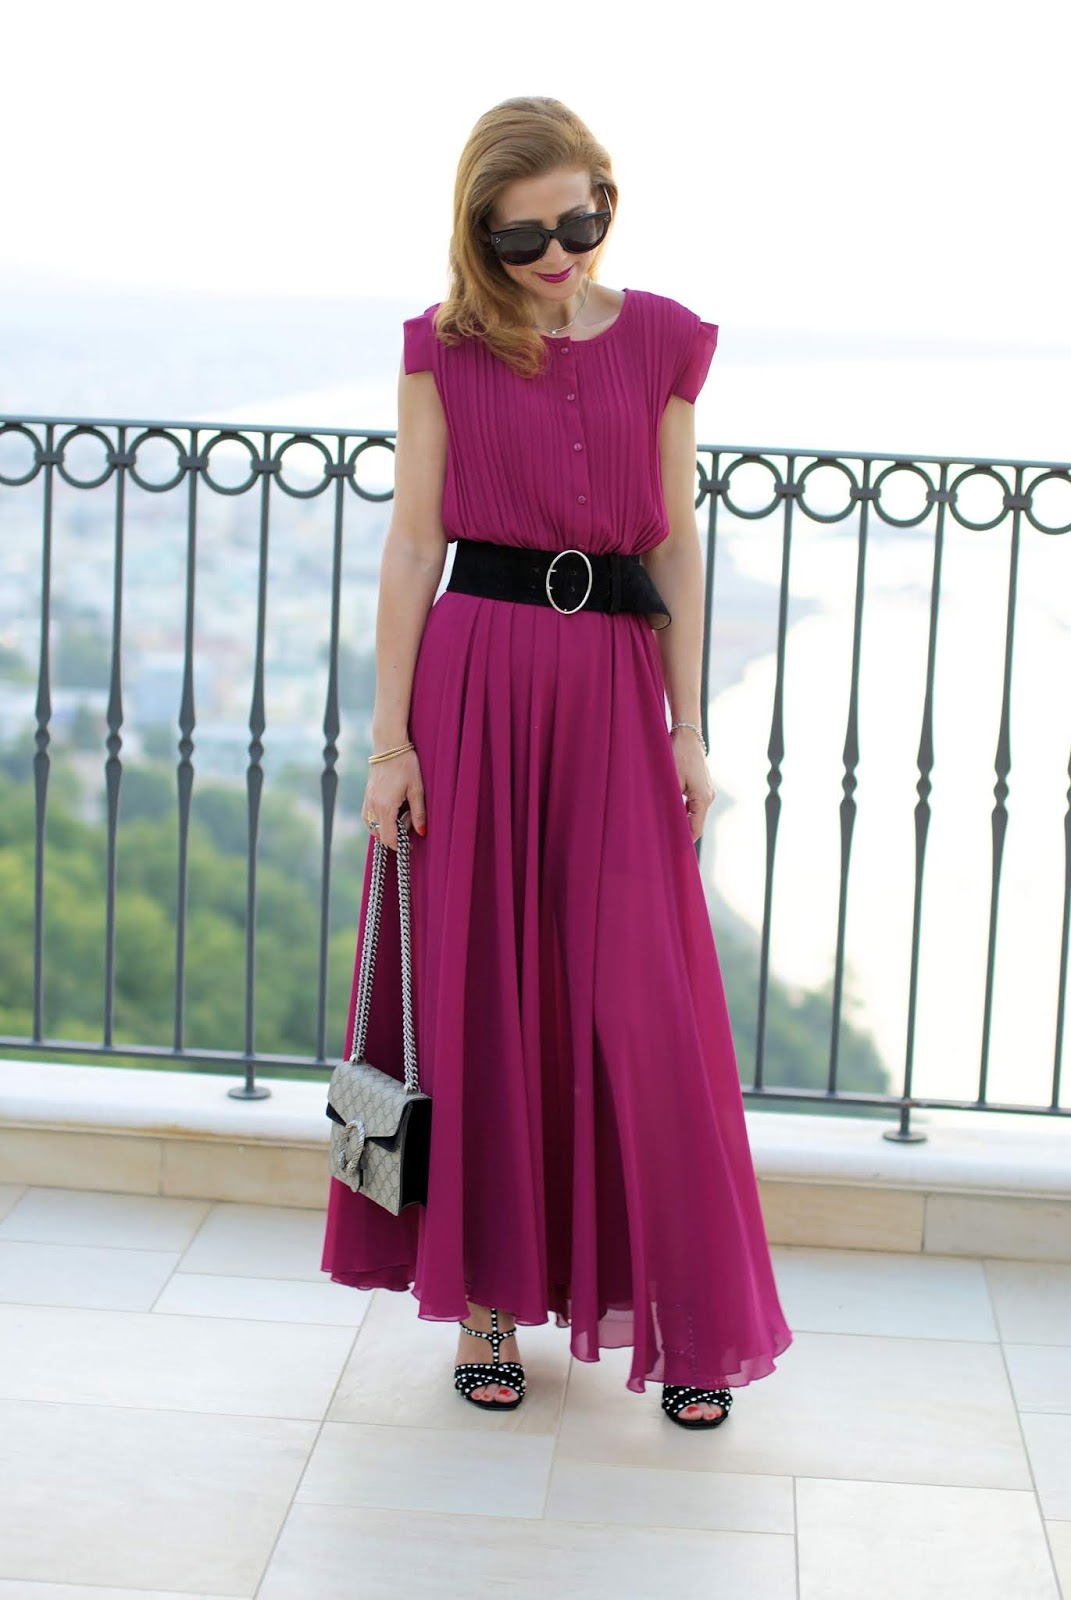 Raspberry chiffon maxi dress and Giancarlo Paoli studded sandals on Fashion and Cookies fashion blog, fashion blogger style